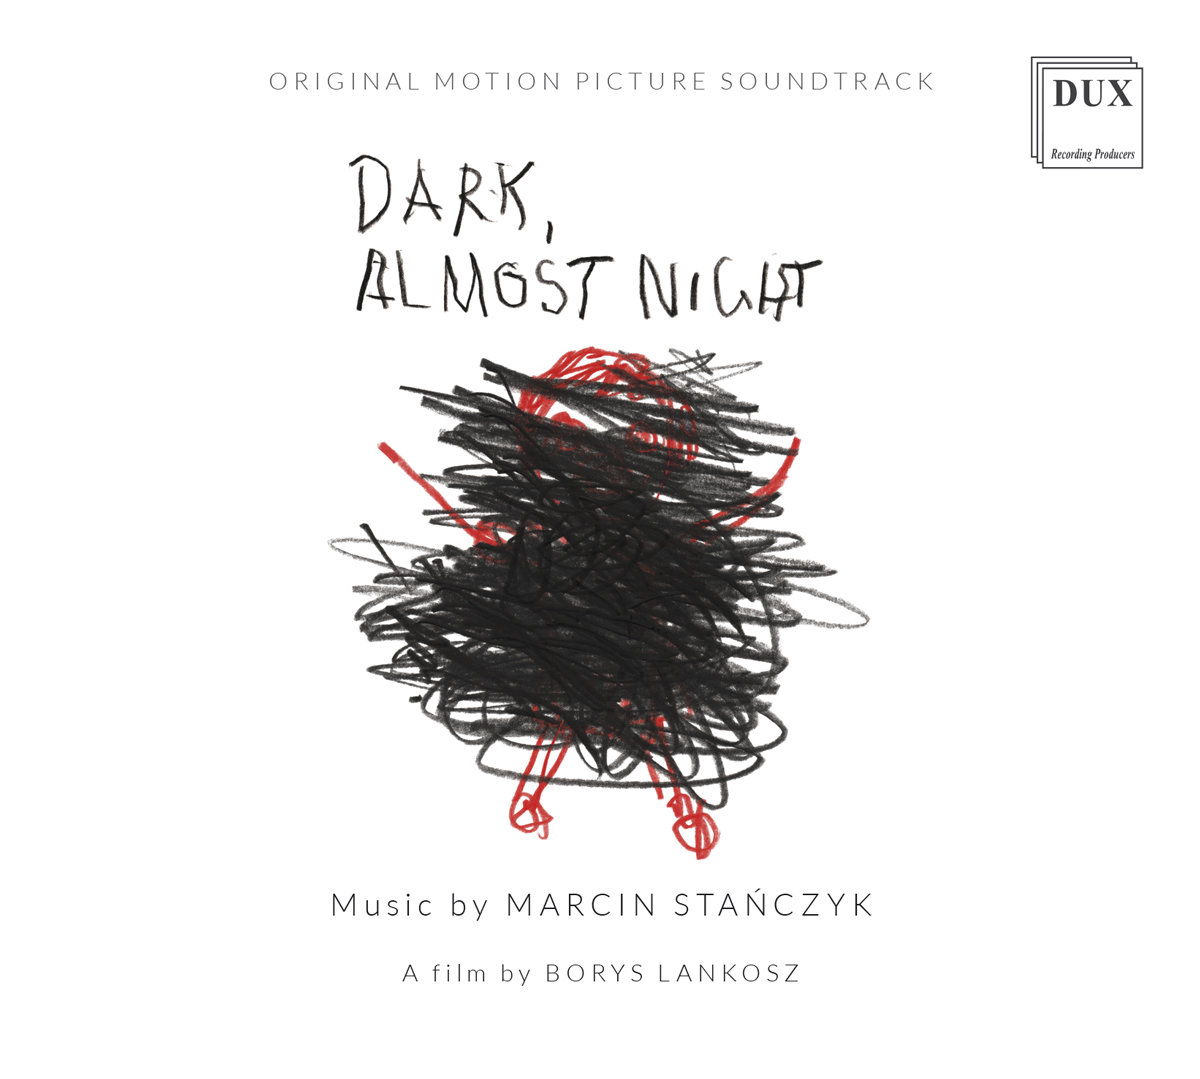 DARK, ALMOST NIGHT. Music by Marcin Stańczyk